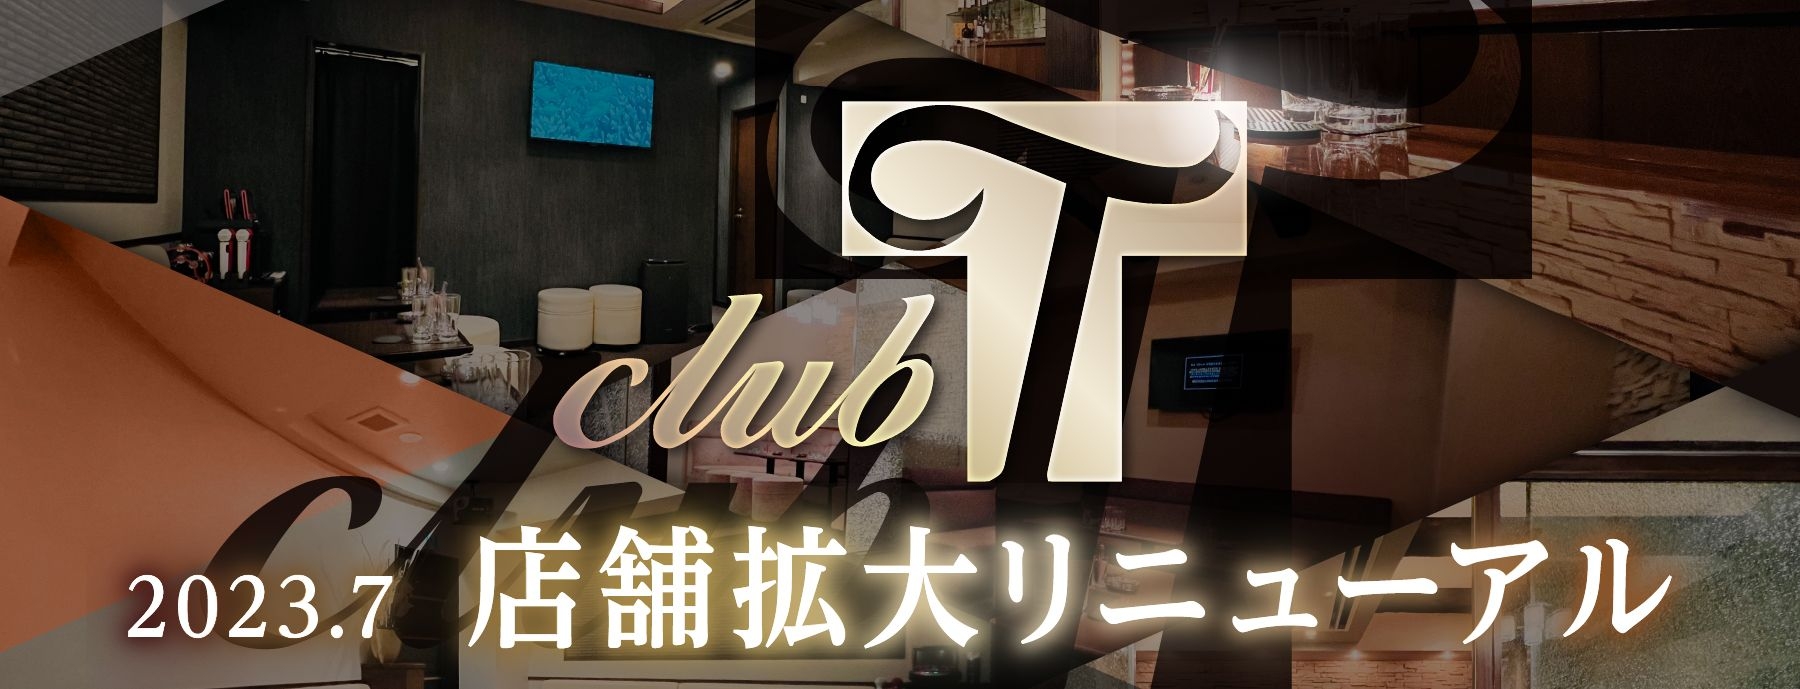 club T